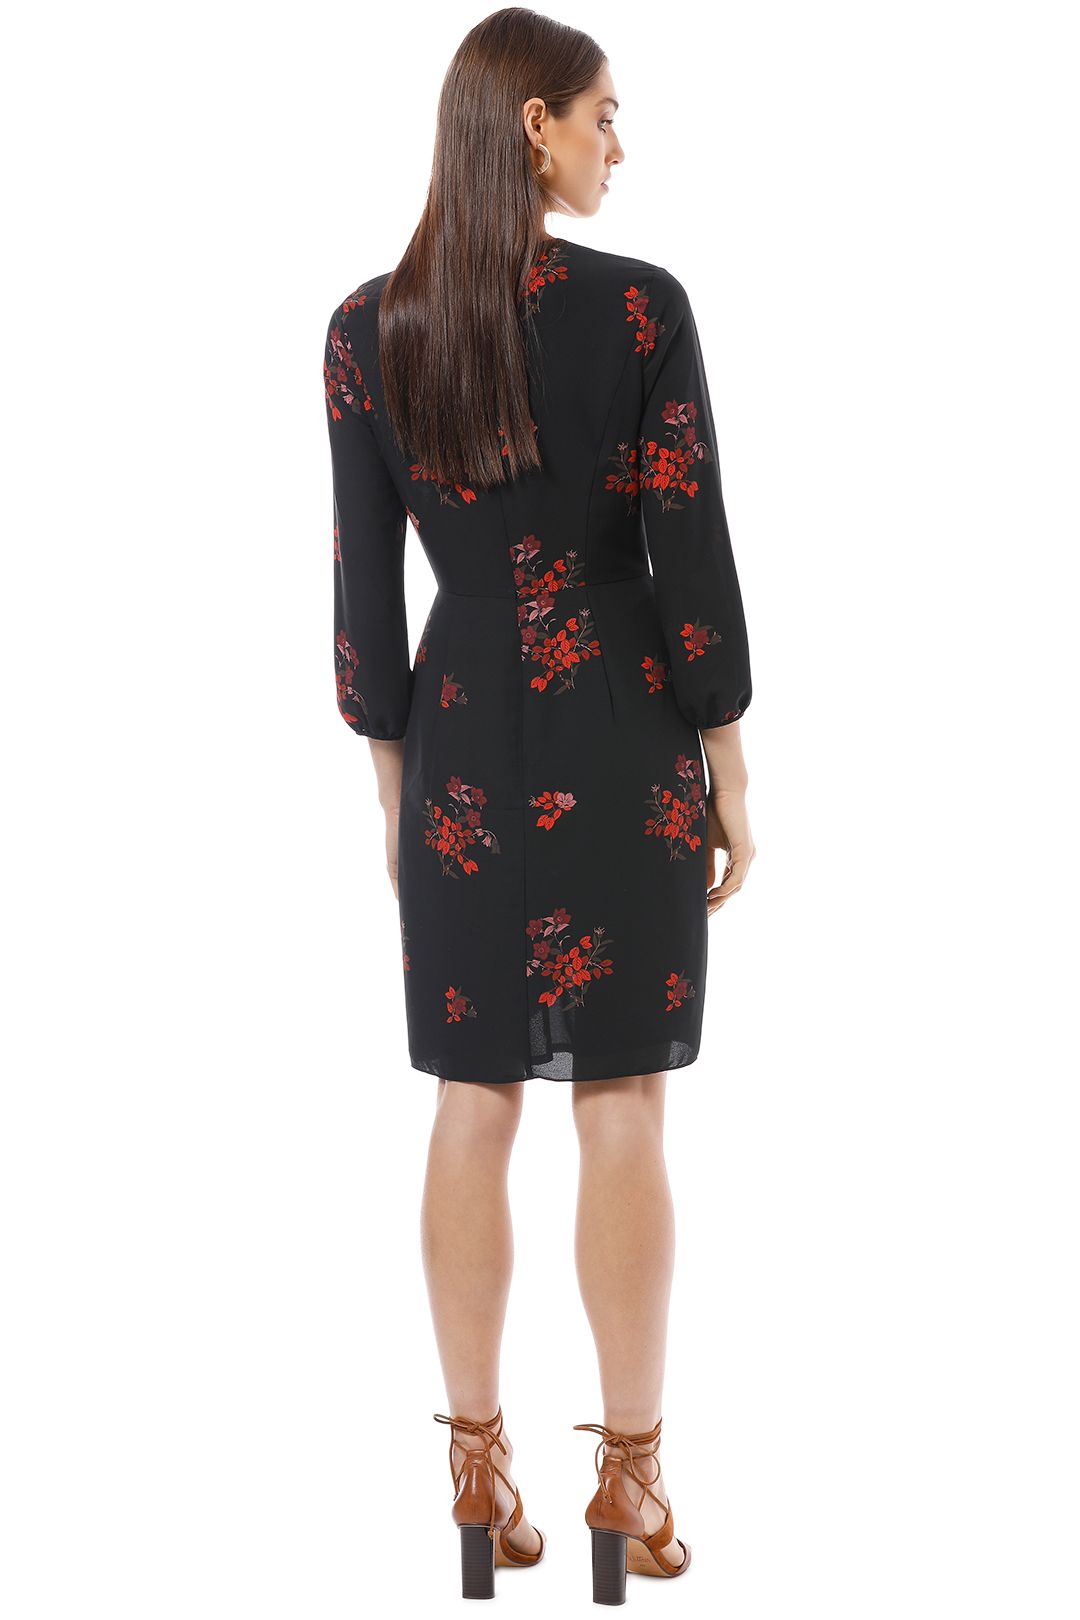 Cue - Autumn Floral Draped Skirt Dress - Print - Back